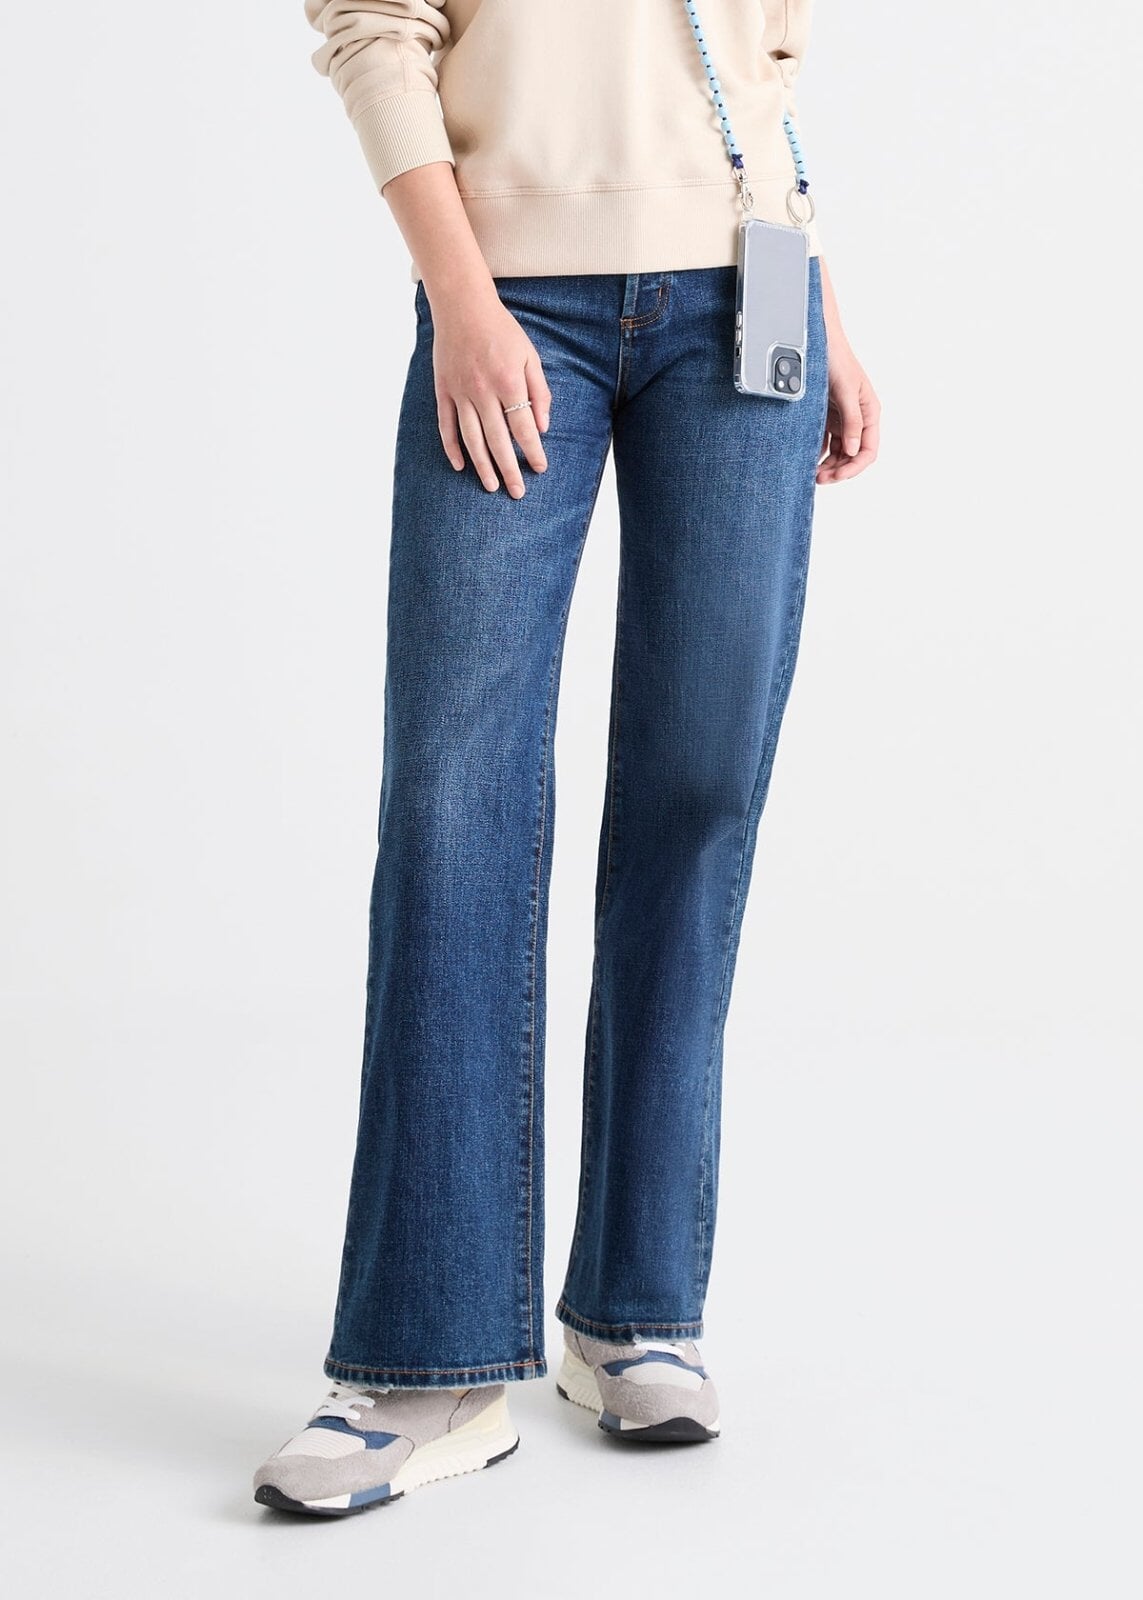 Women's Wide Leg Dark blue stretch jeans front